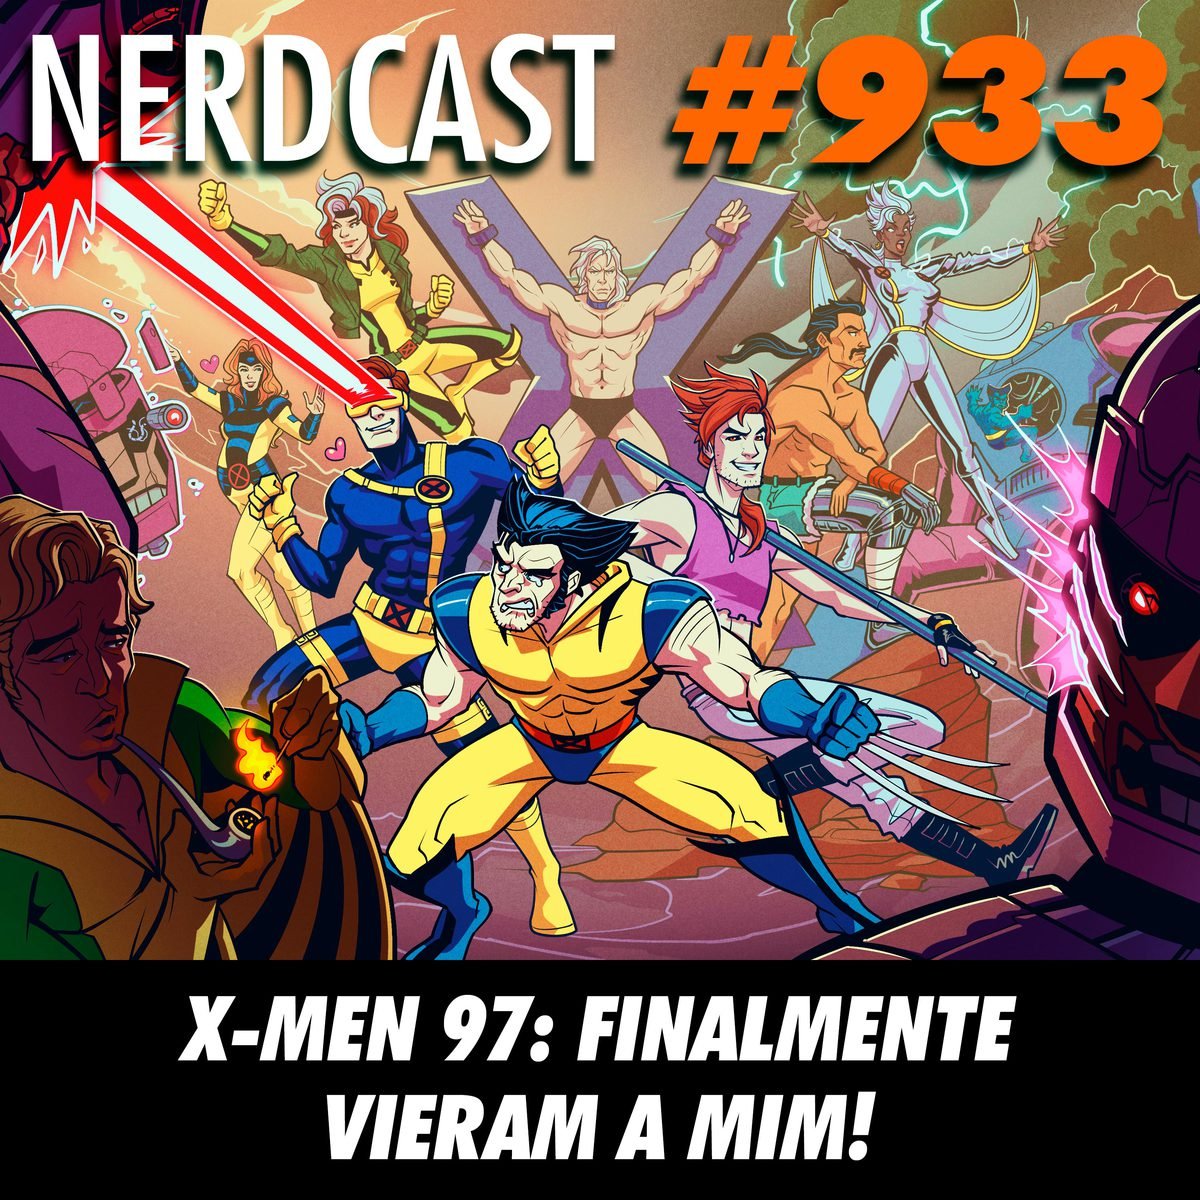 NerdCast 933 - X-Men ’97: Finalmente vieram a mim!